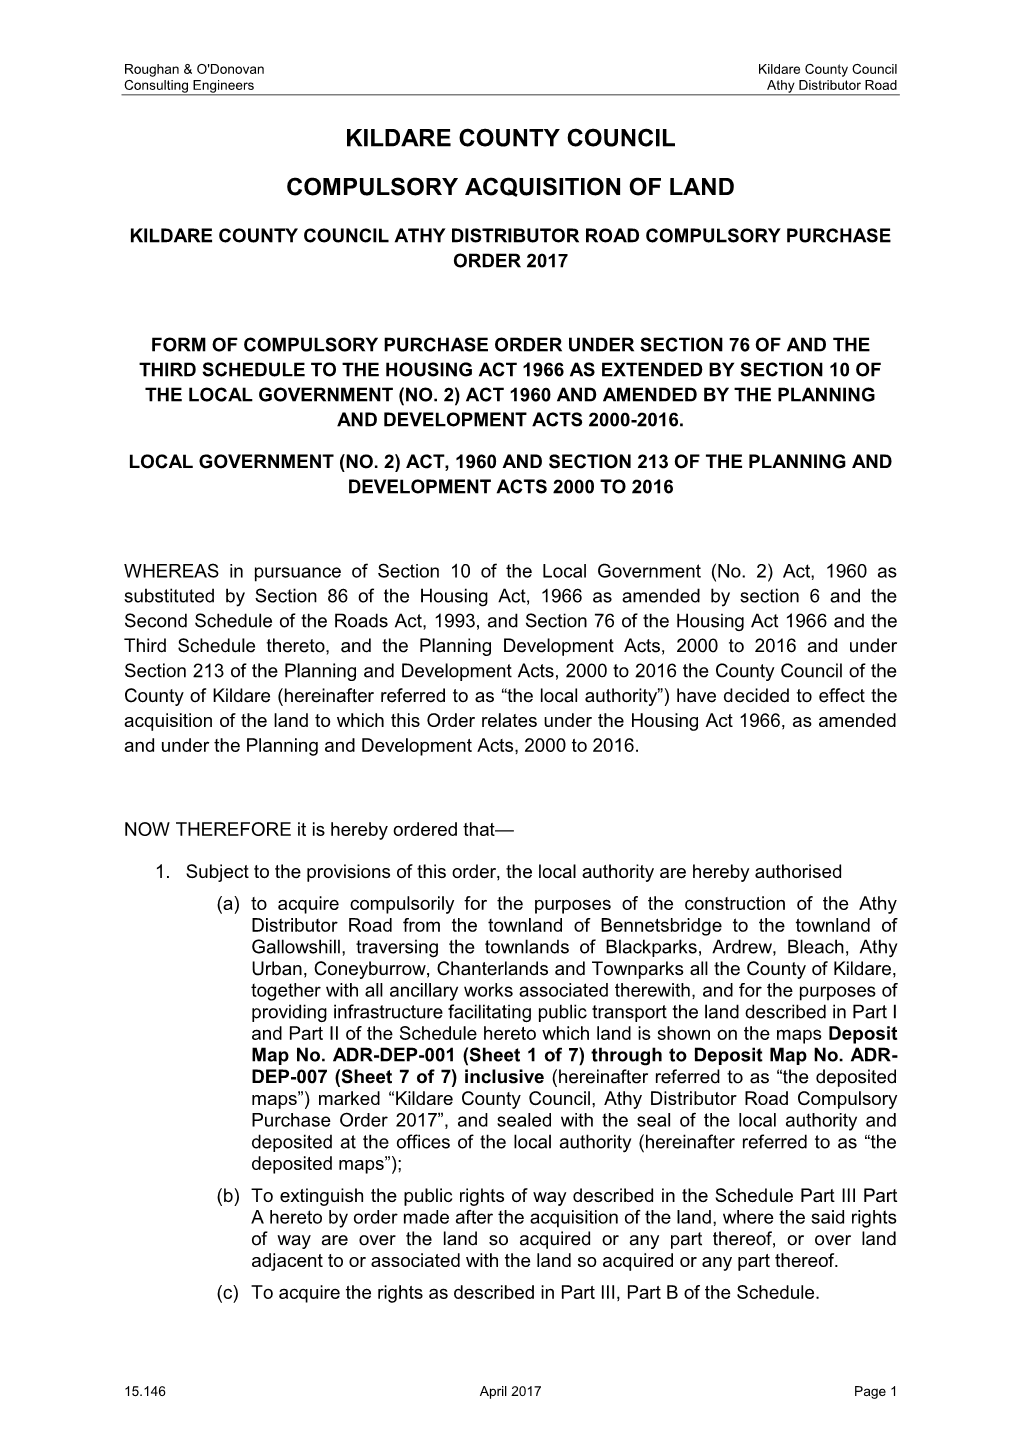 Kildare County Council Compulsory Acquisition Of